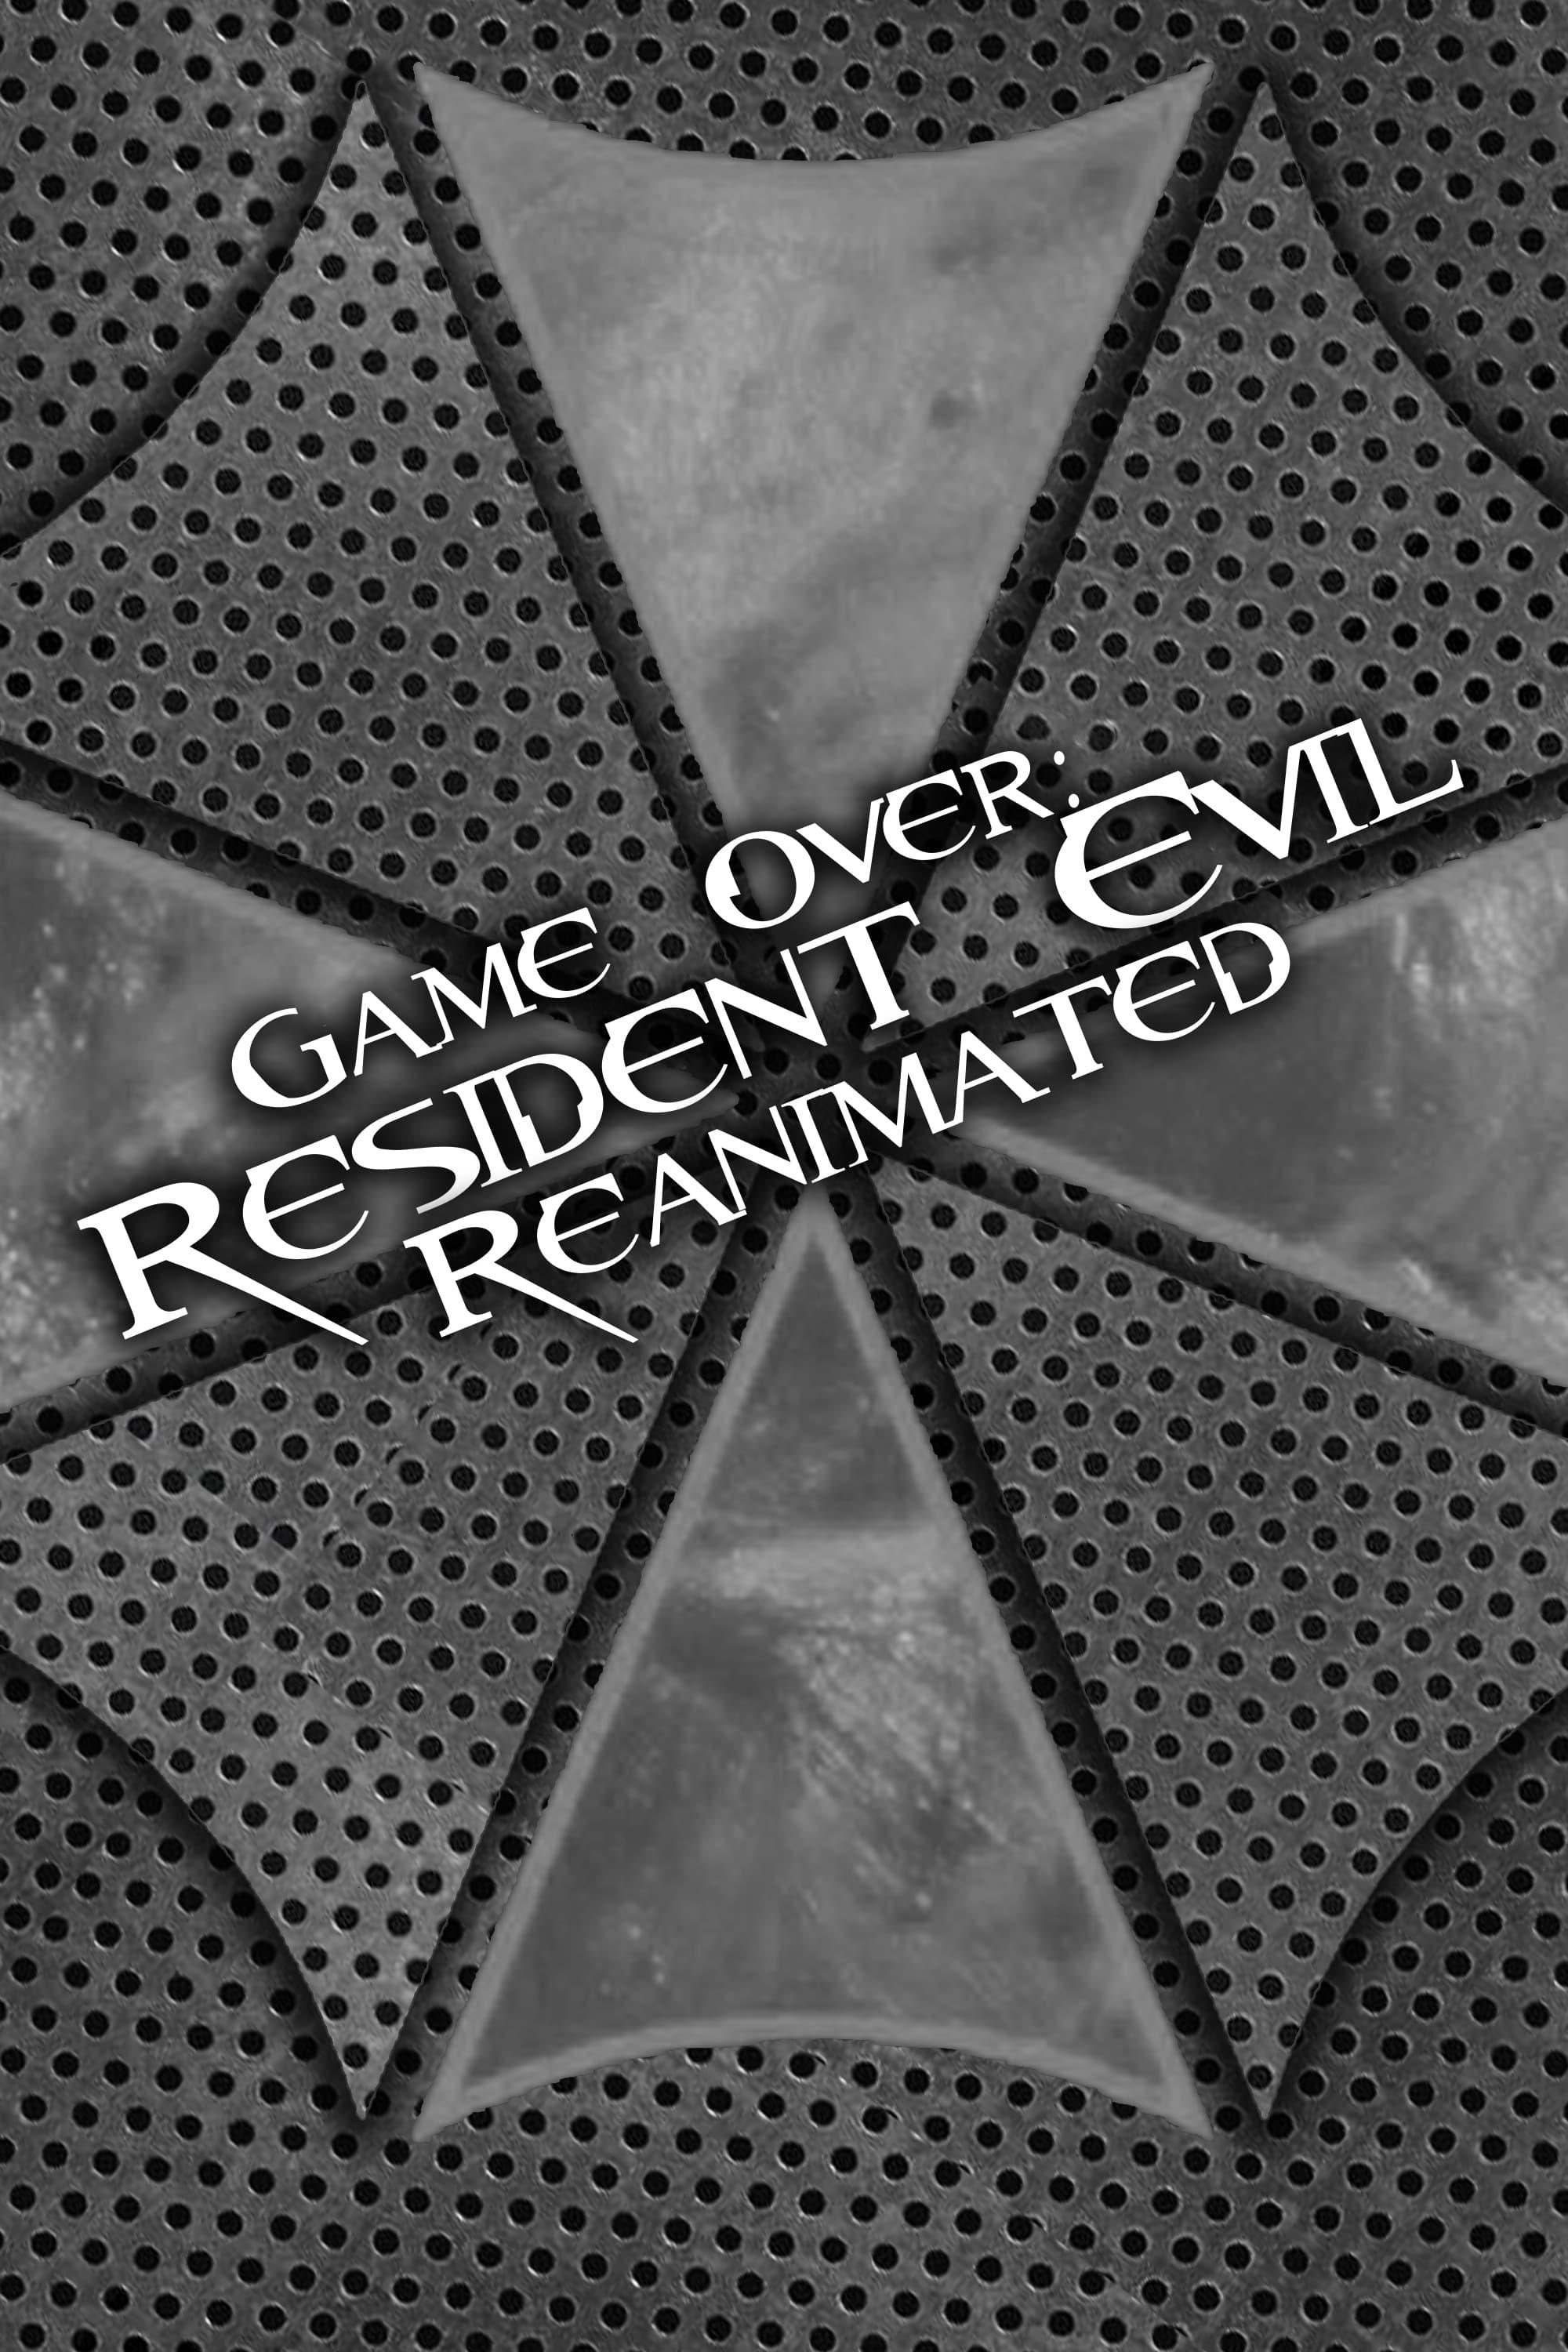 Game Over: Resident Evil Reanimated poster